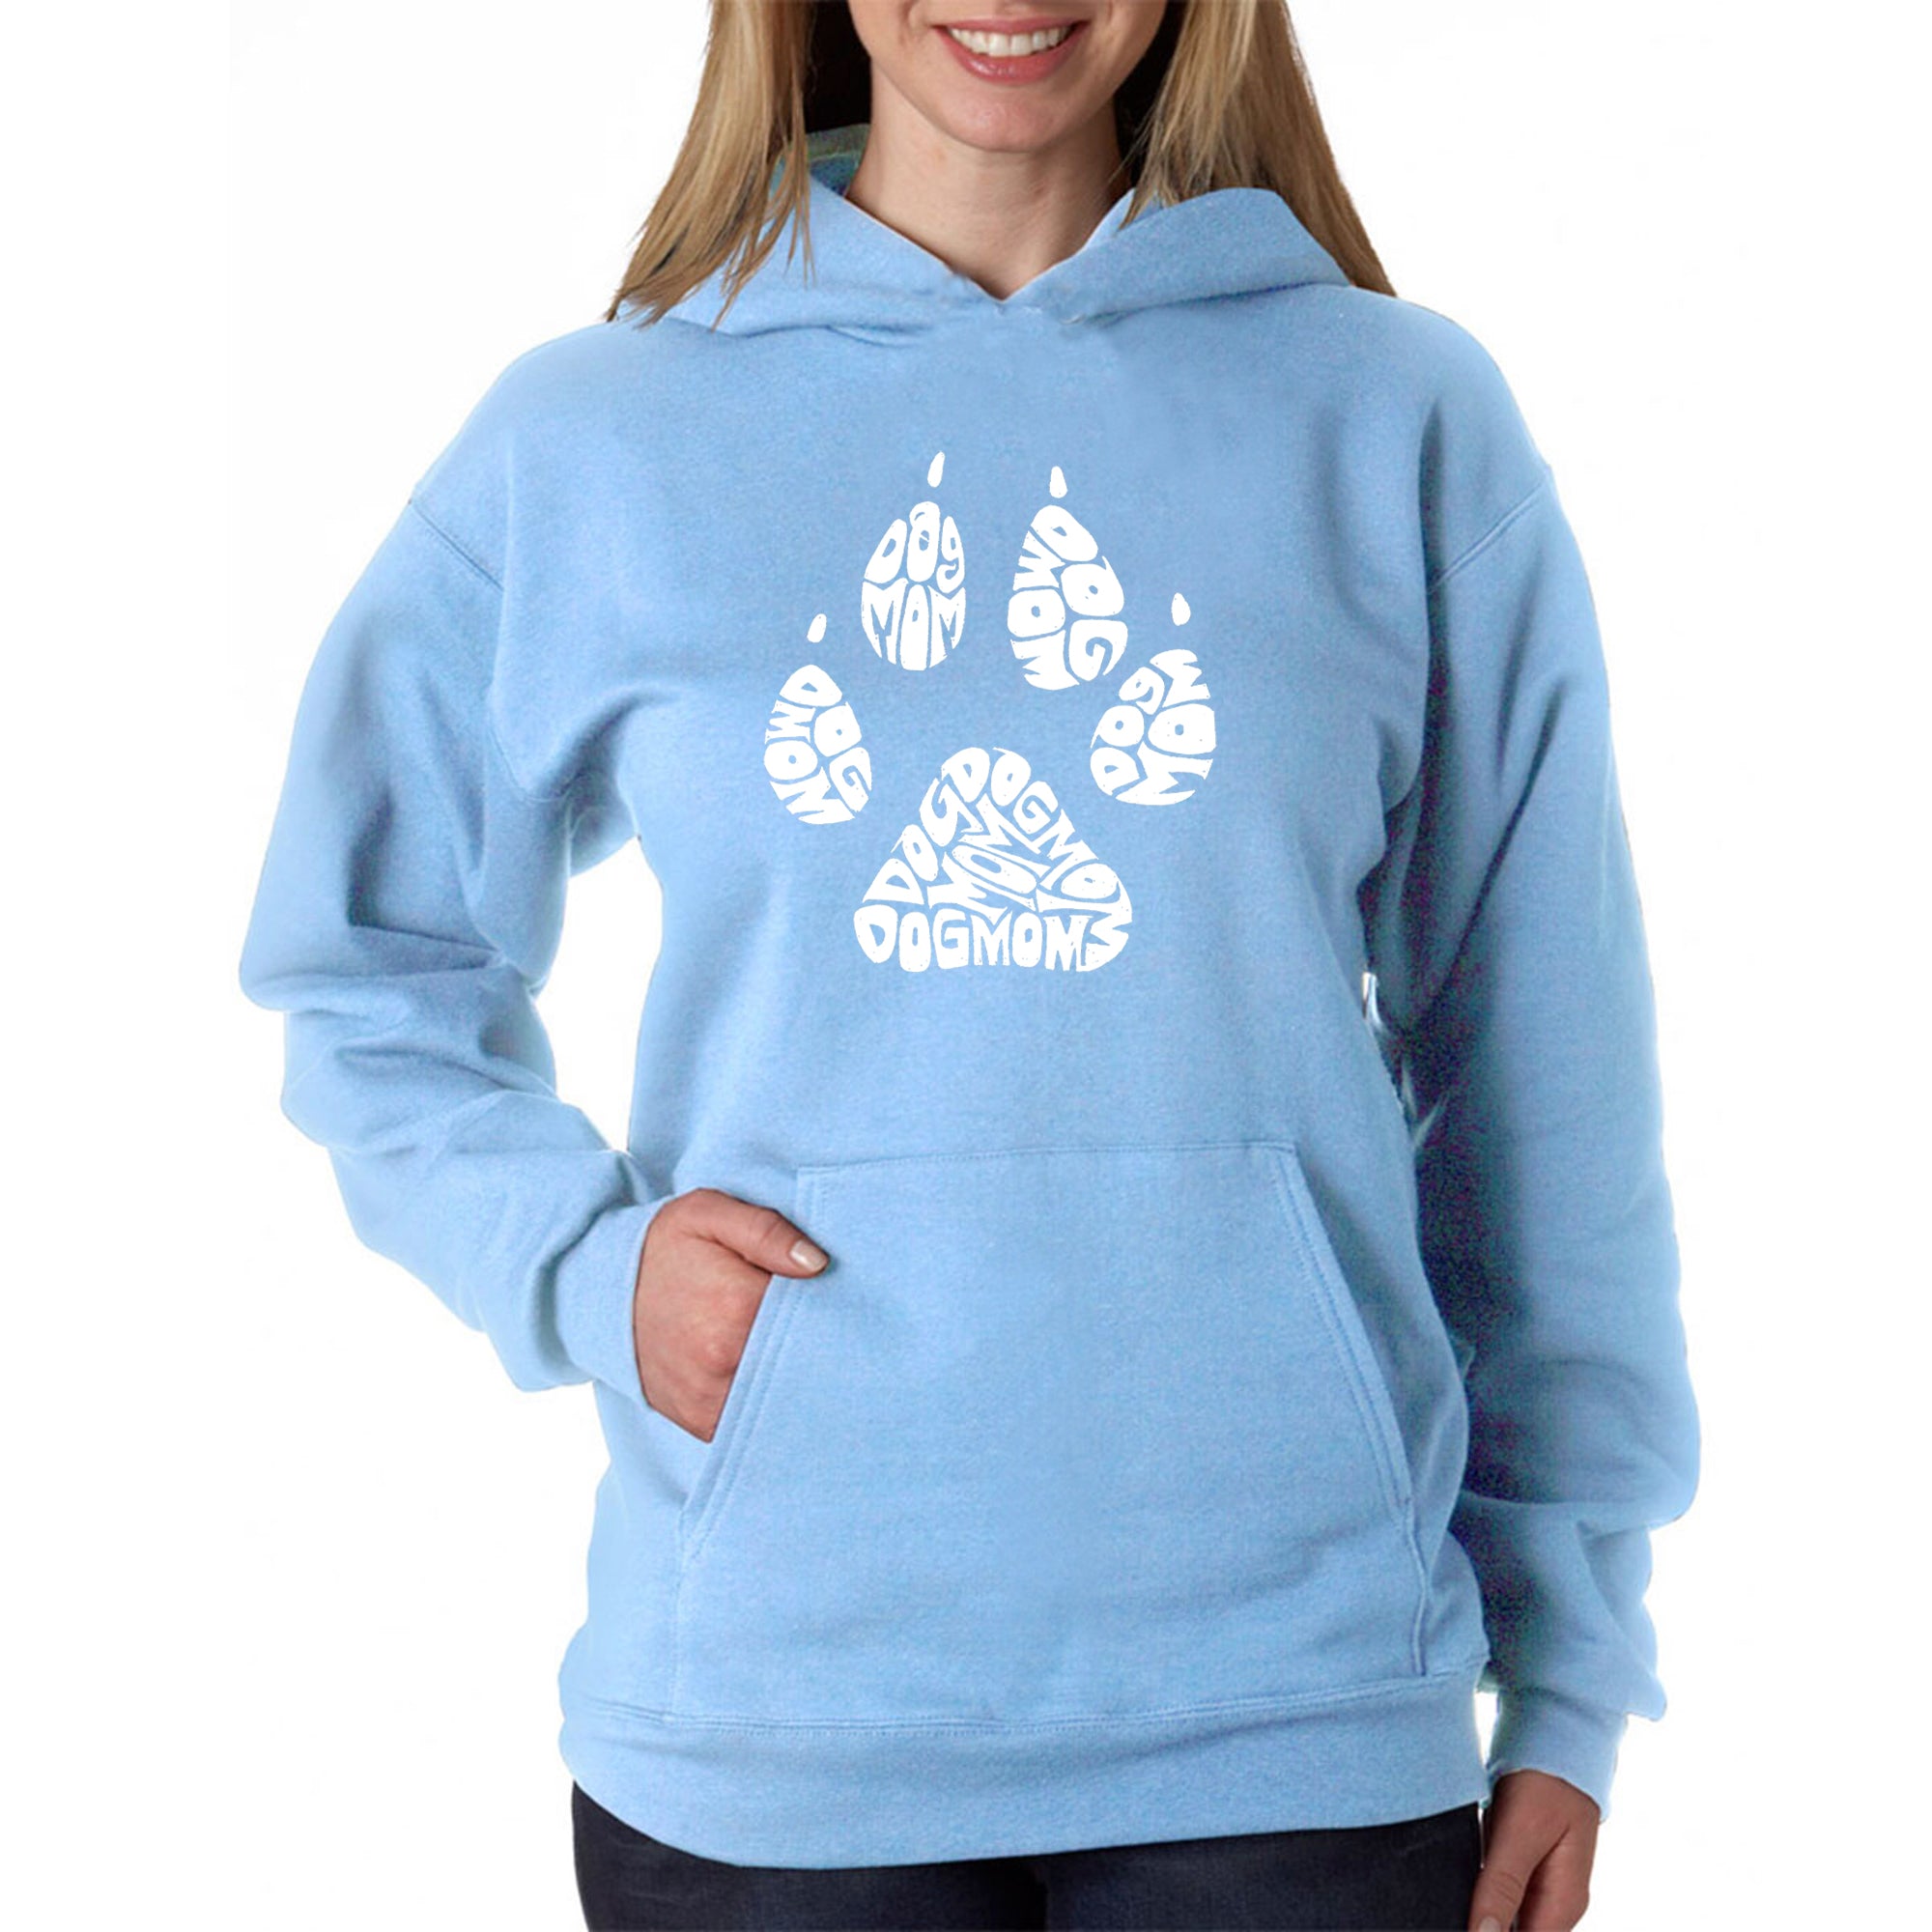 Dog Mom - Women's Word Art Hooded Sweatshirt - Blue - X-Large